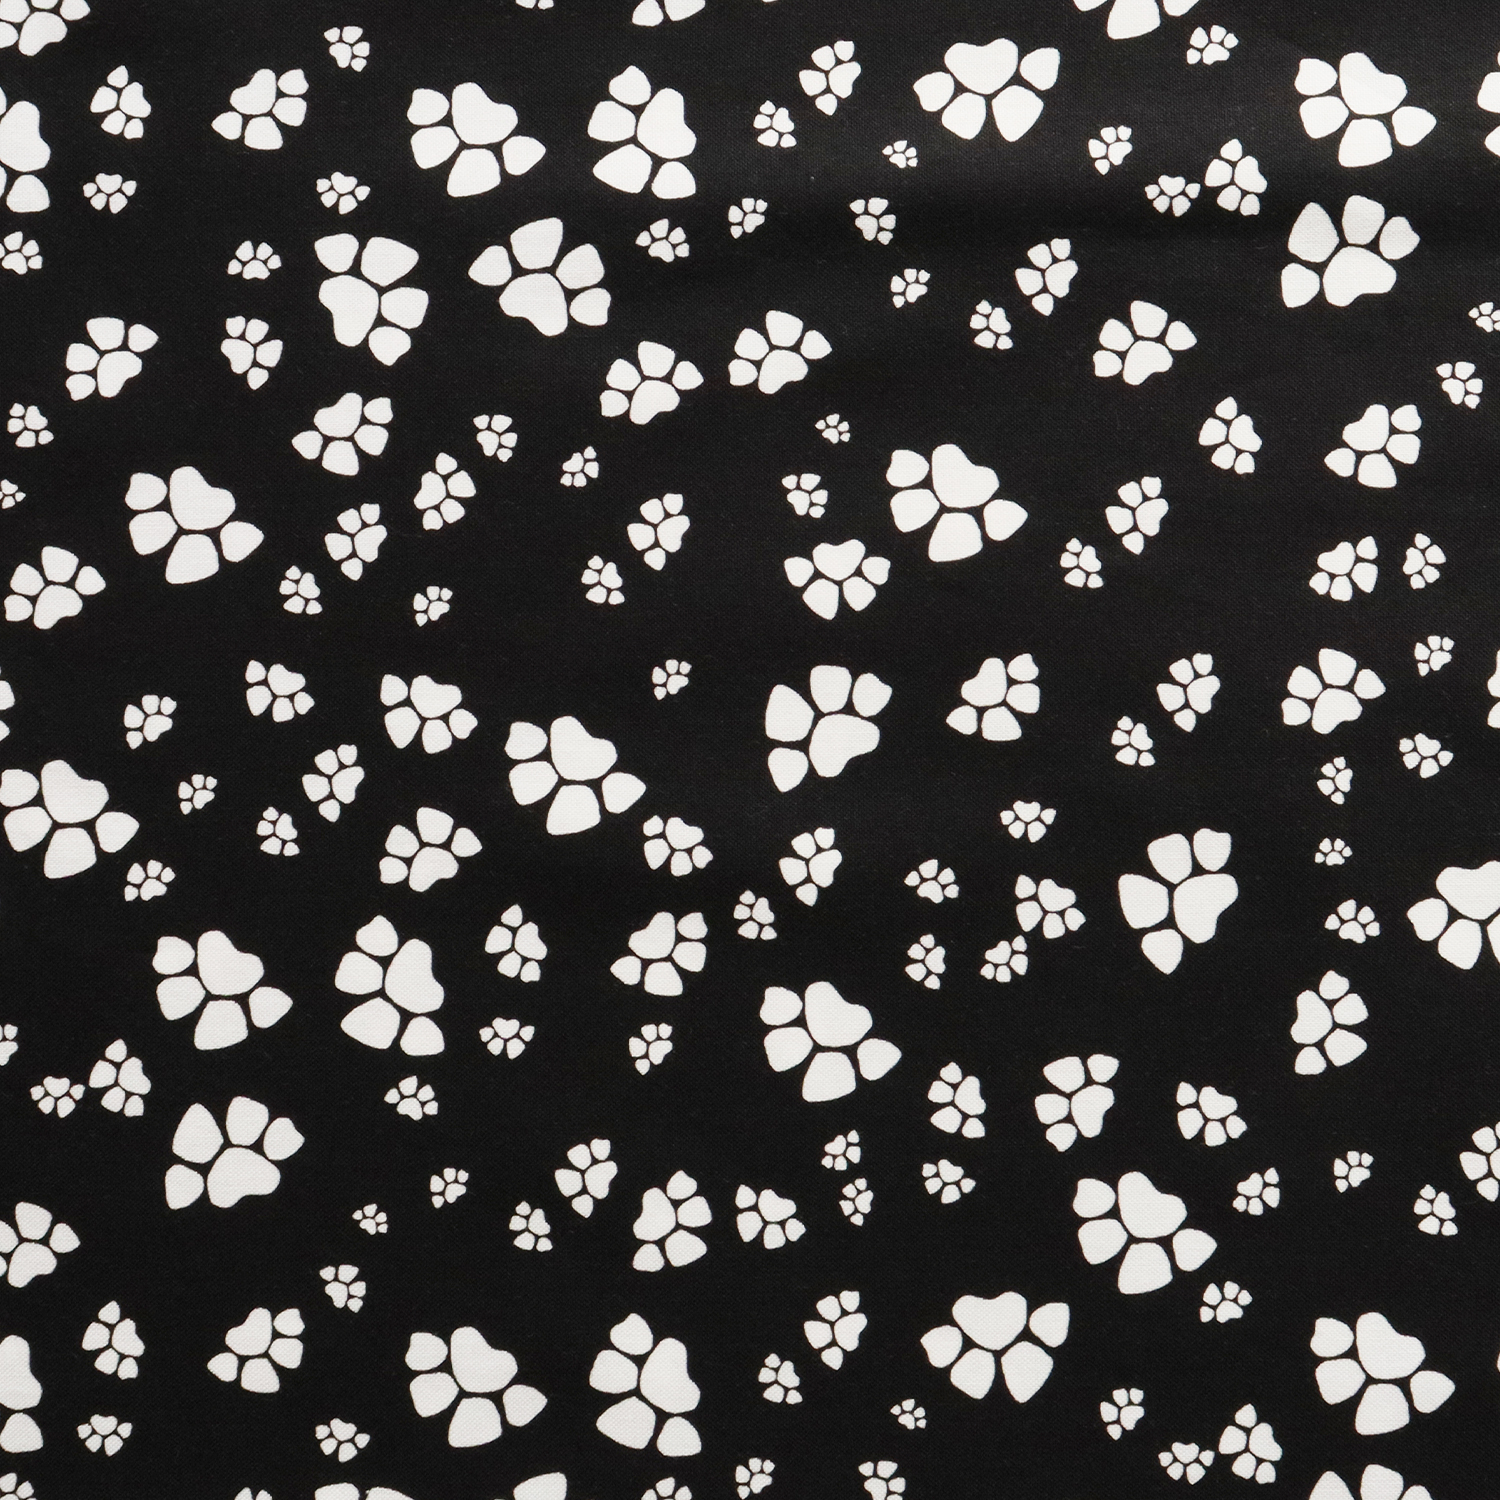 ■LORA692-499 Loralie Designs ブラック地ホワイト肉球 巾約110cm 原反約10.9m (巻)